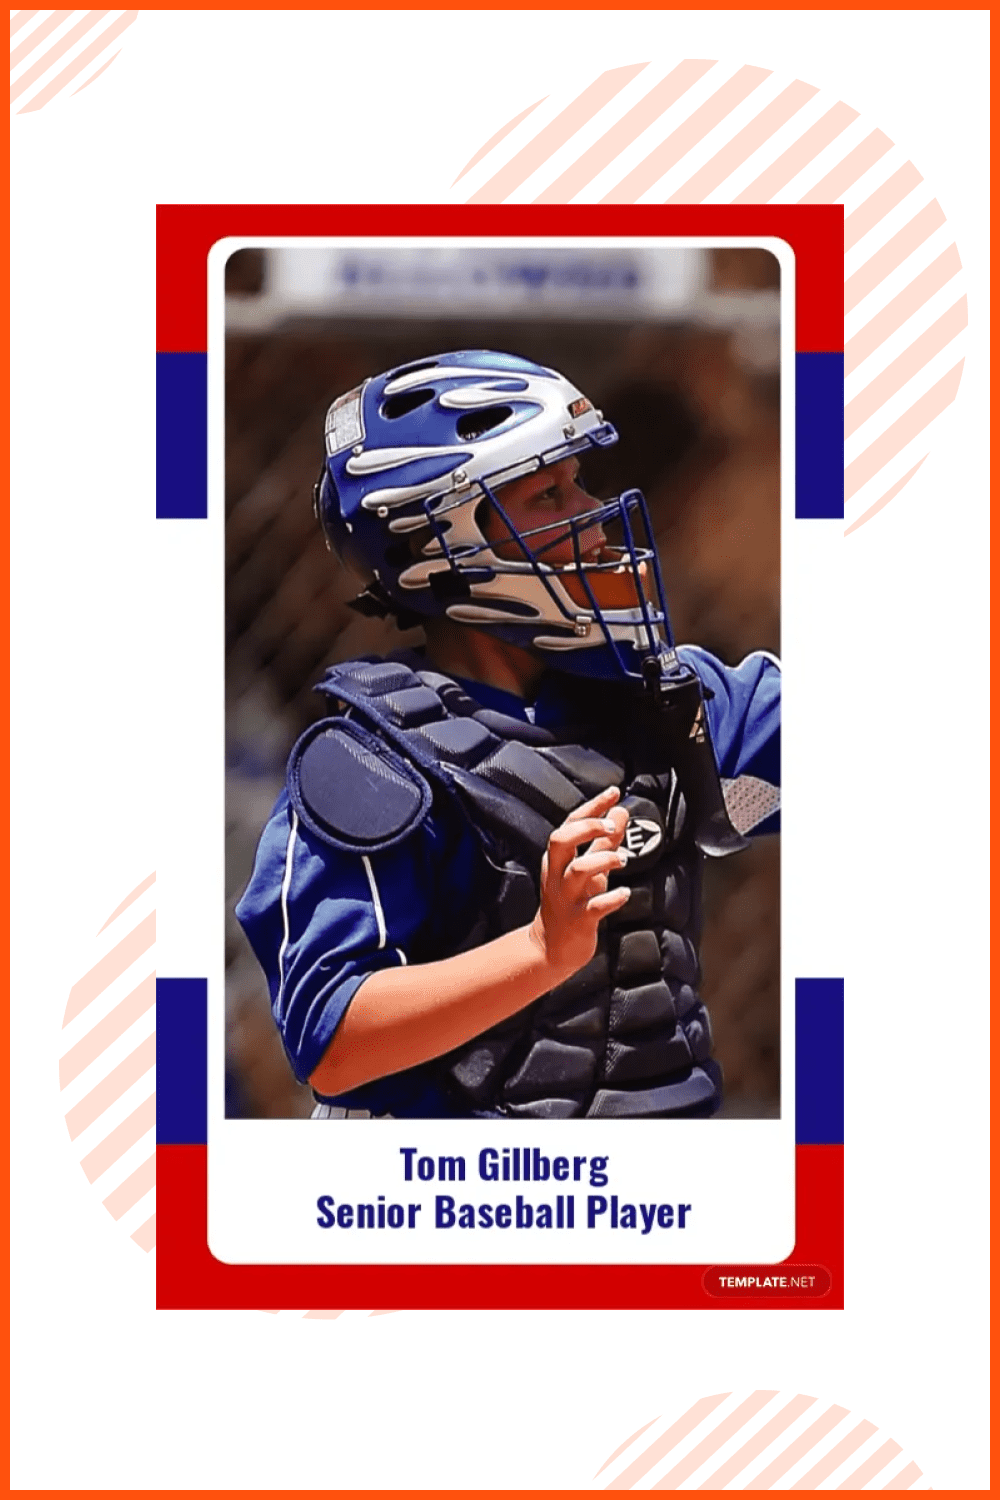 A professionally made template to make a senior baseball trading card.